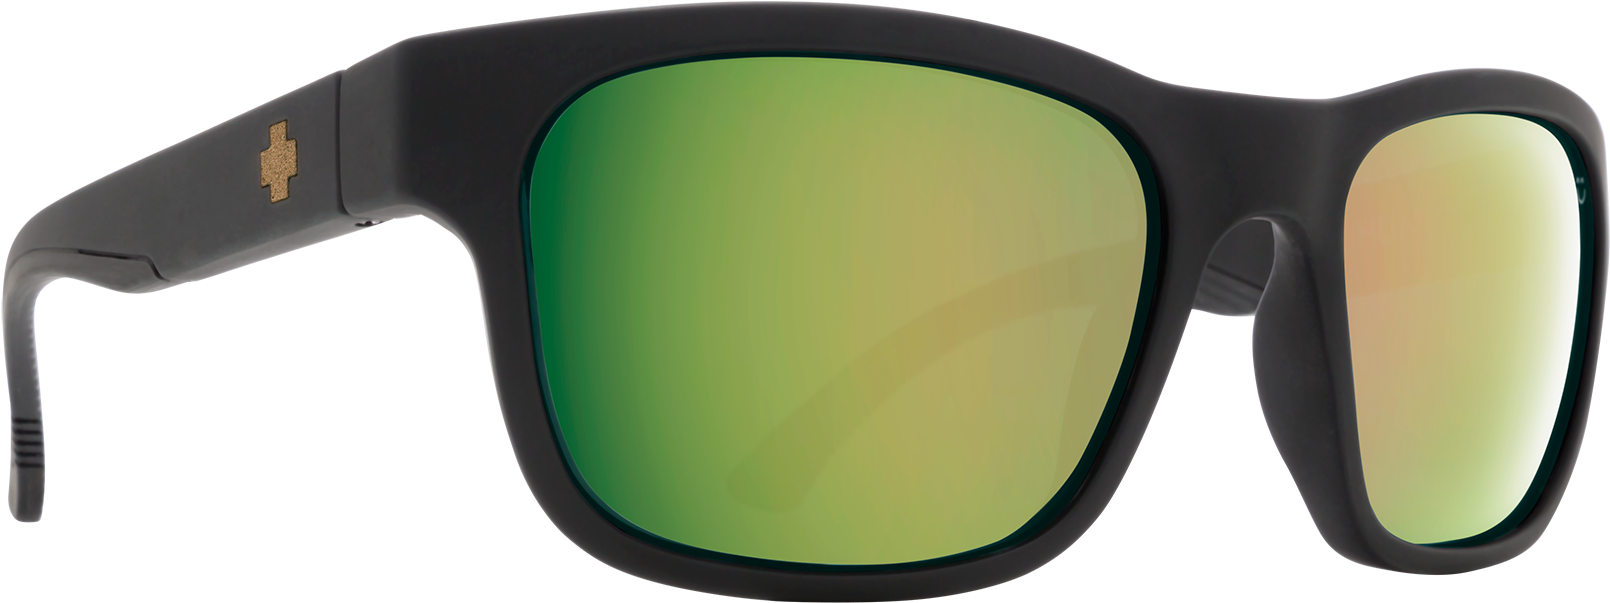 Stylish Black Sunglasses PNG